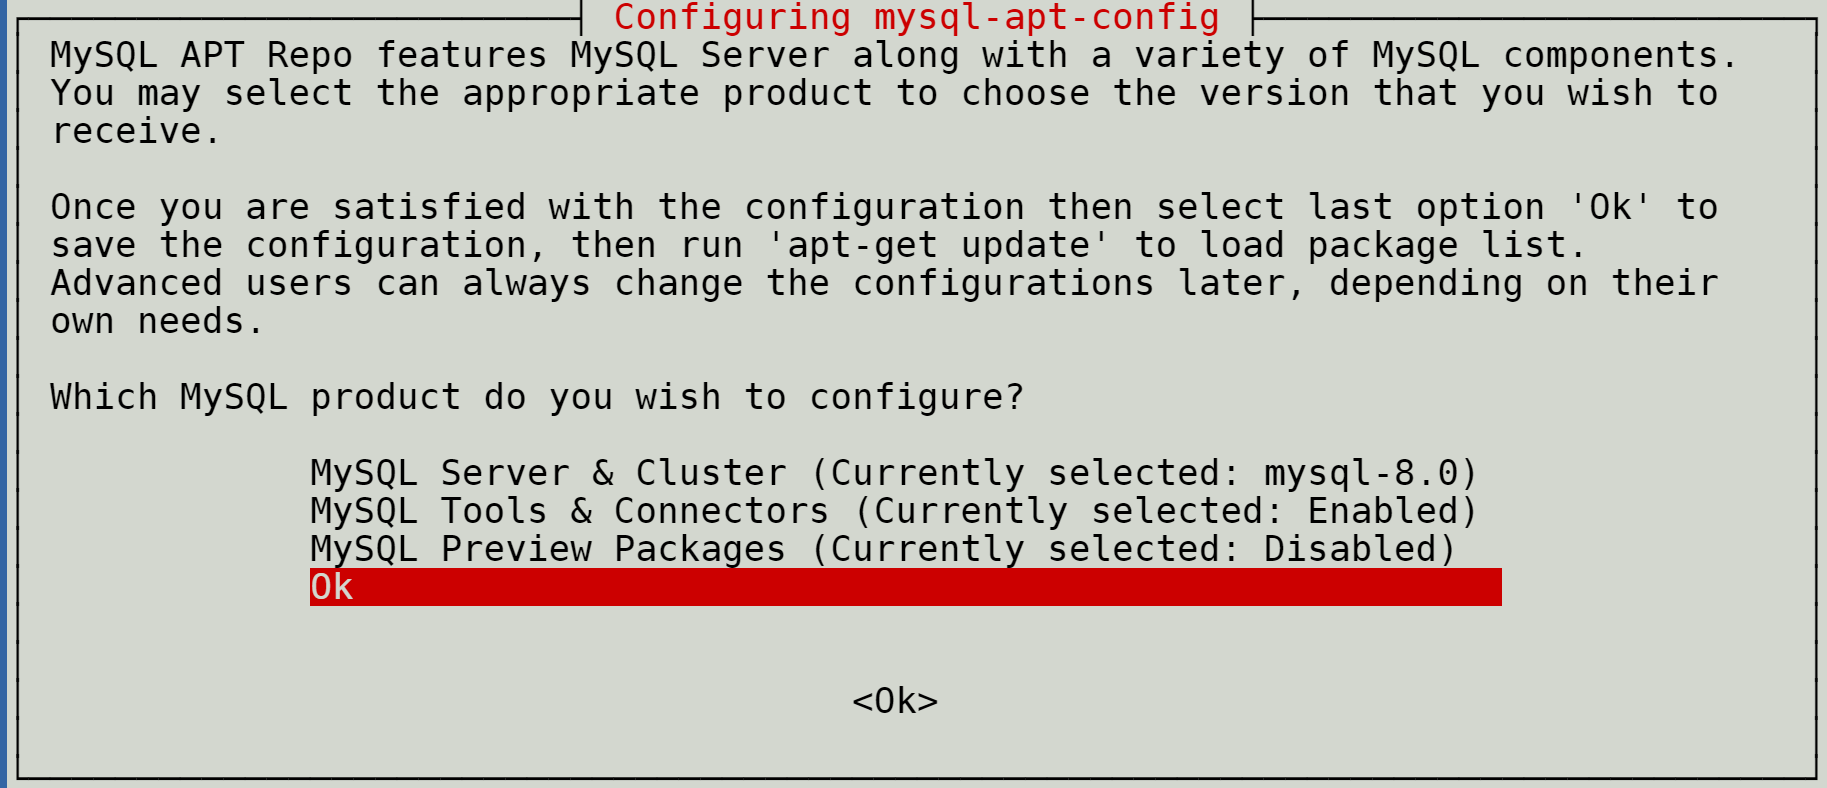 Saving the current MySQL product configurations